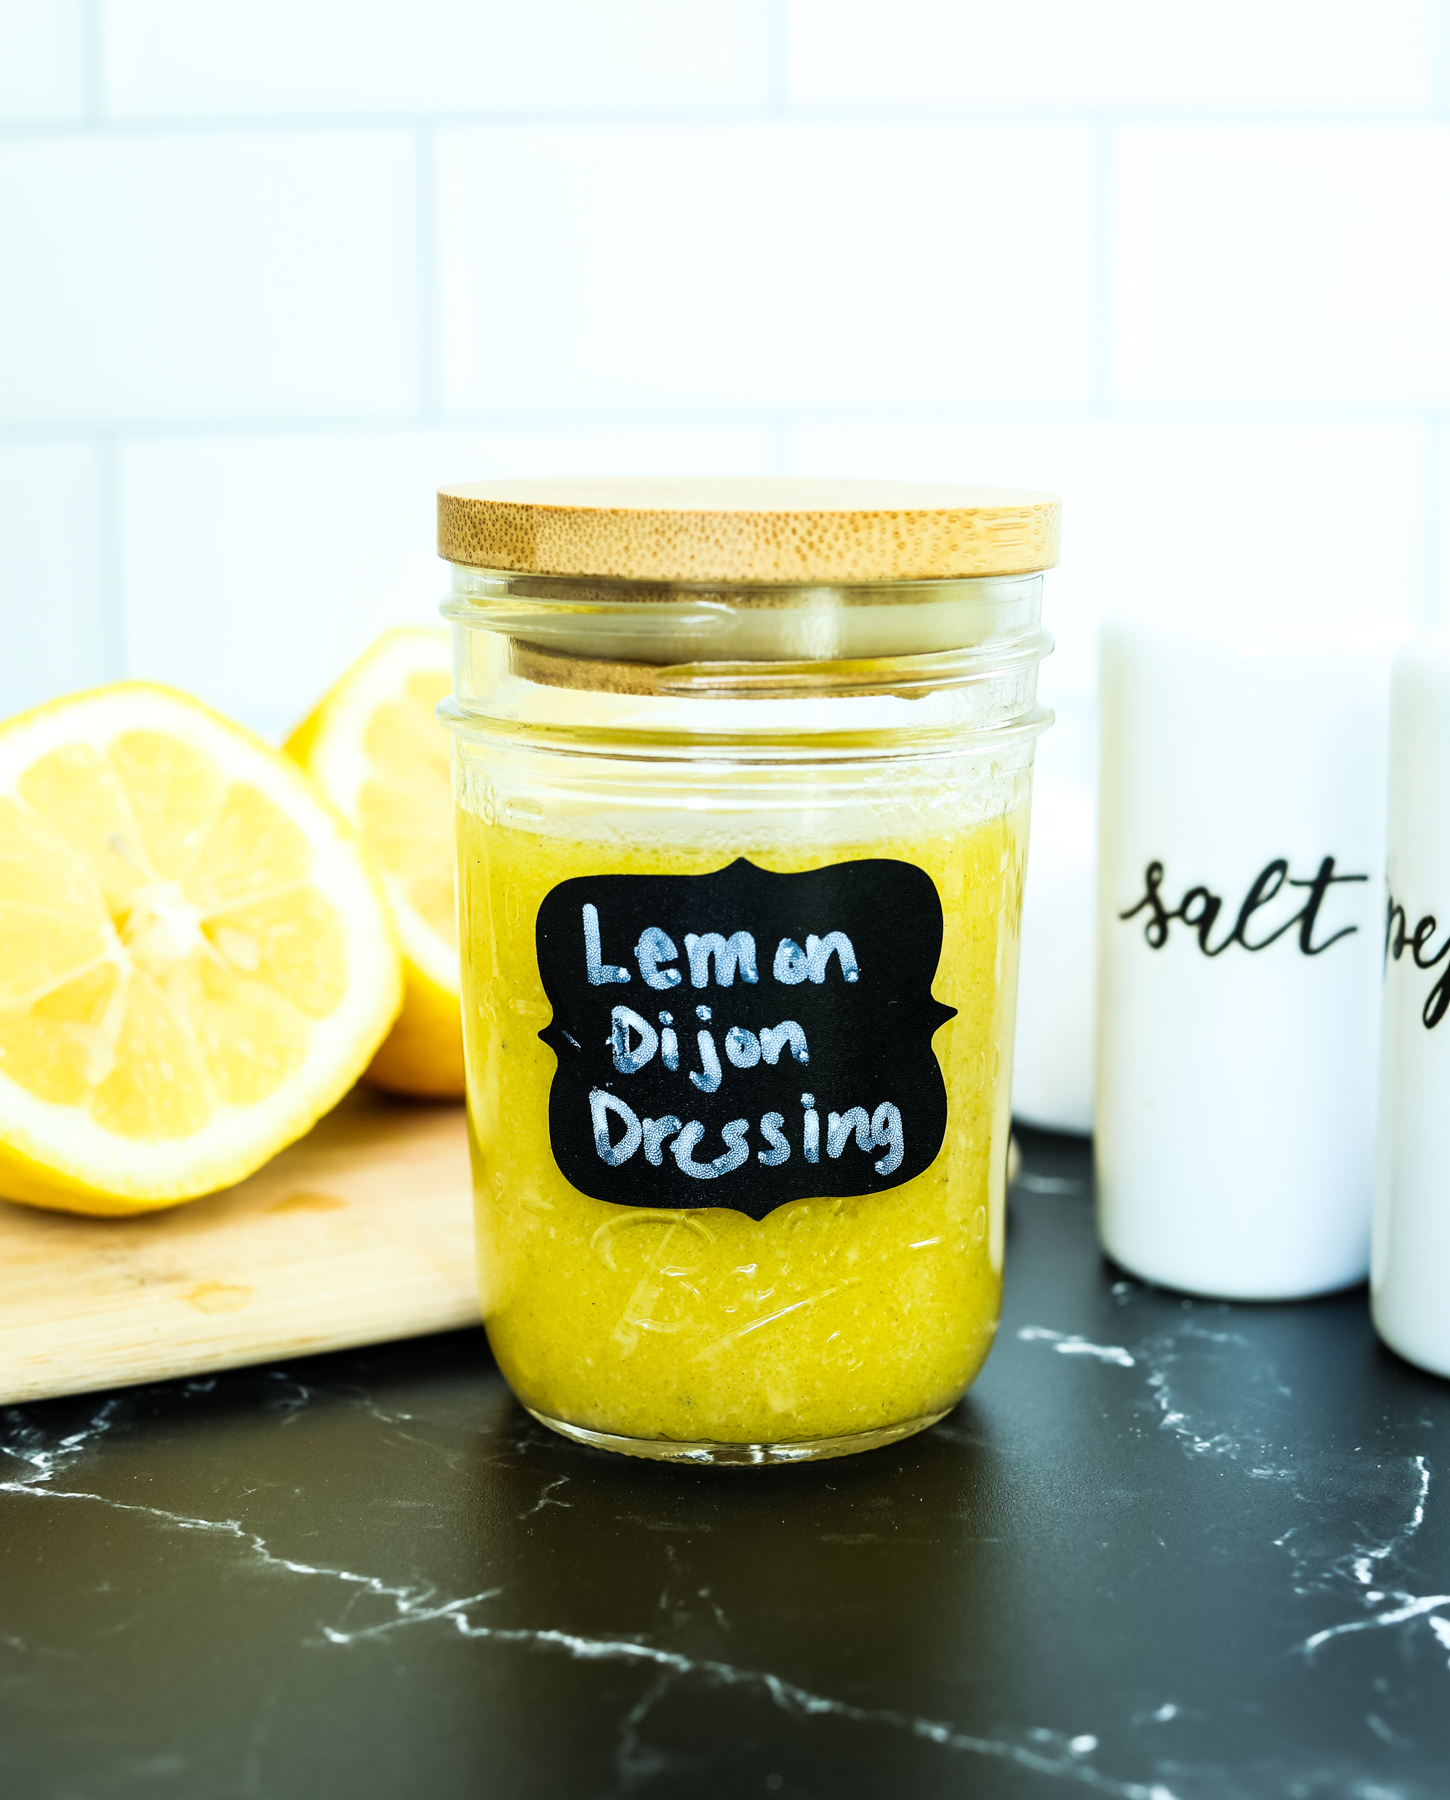 lemon dijon dressing in a jar with a black label